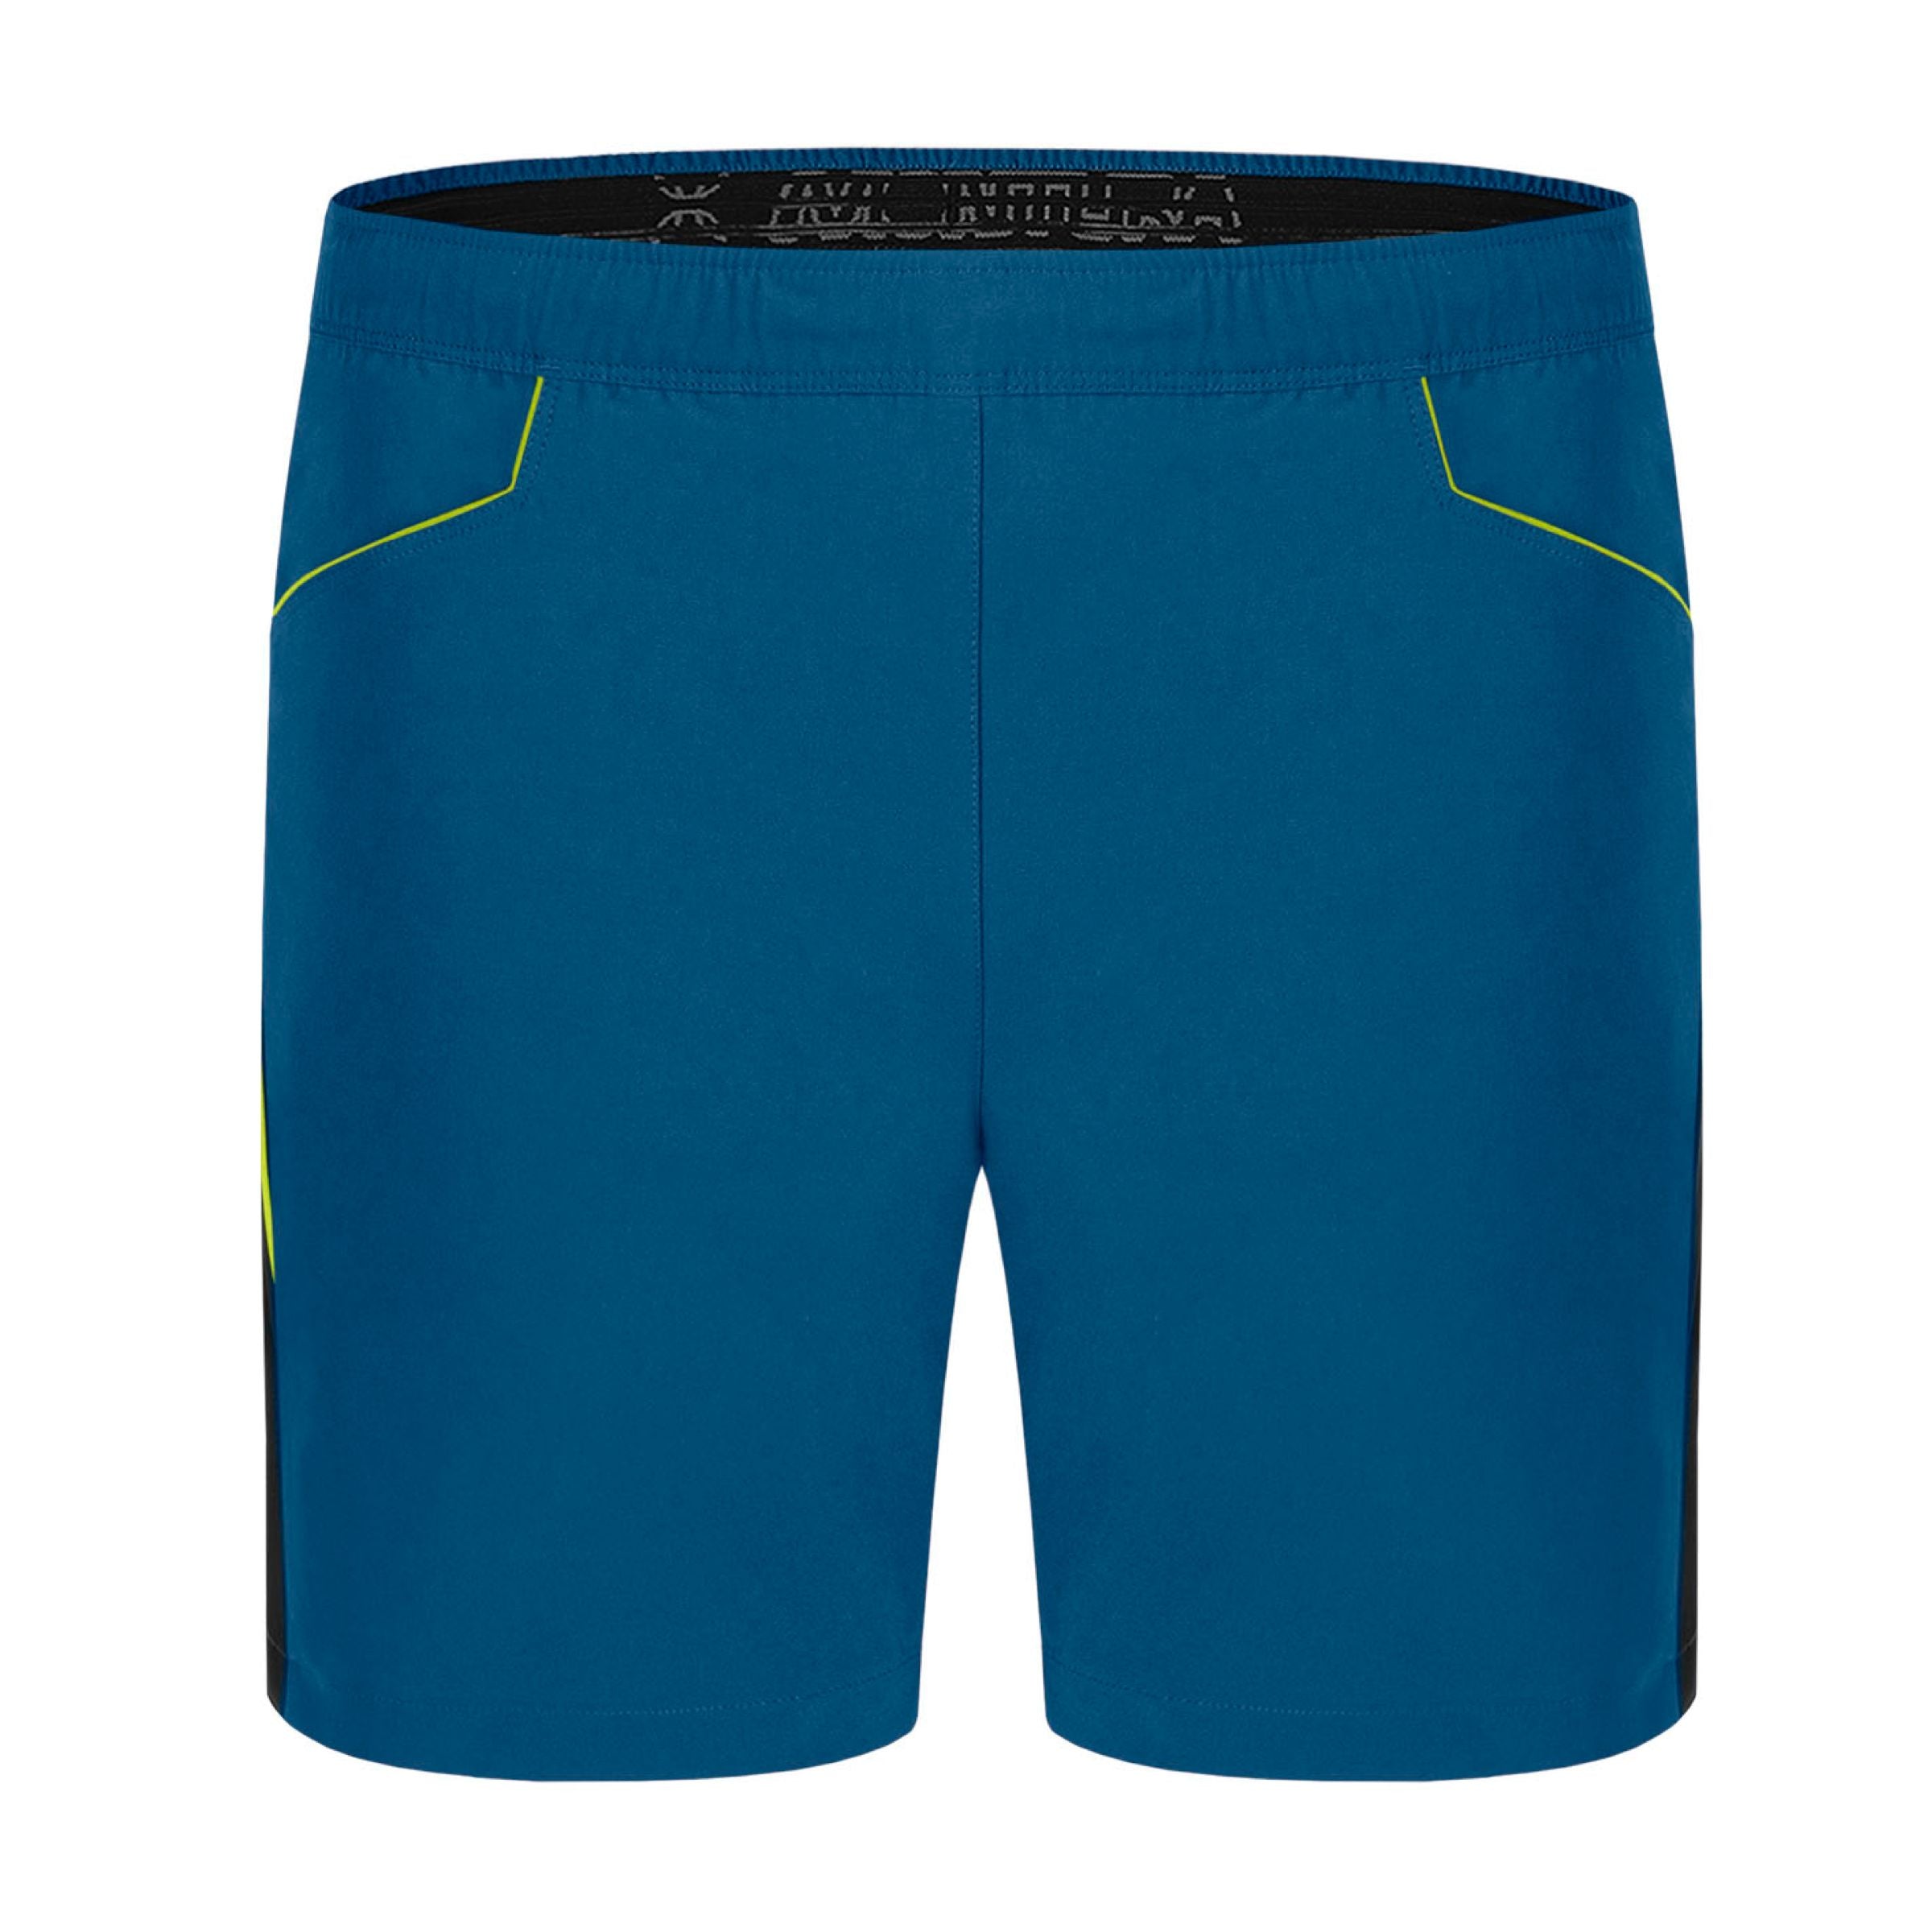 Men's Spitze Shorts Care Blue/Nero 